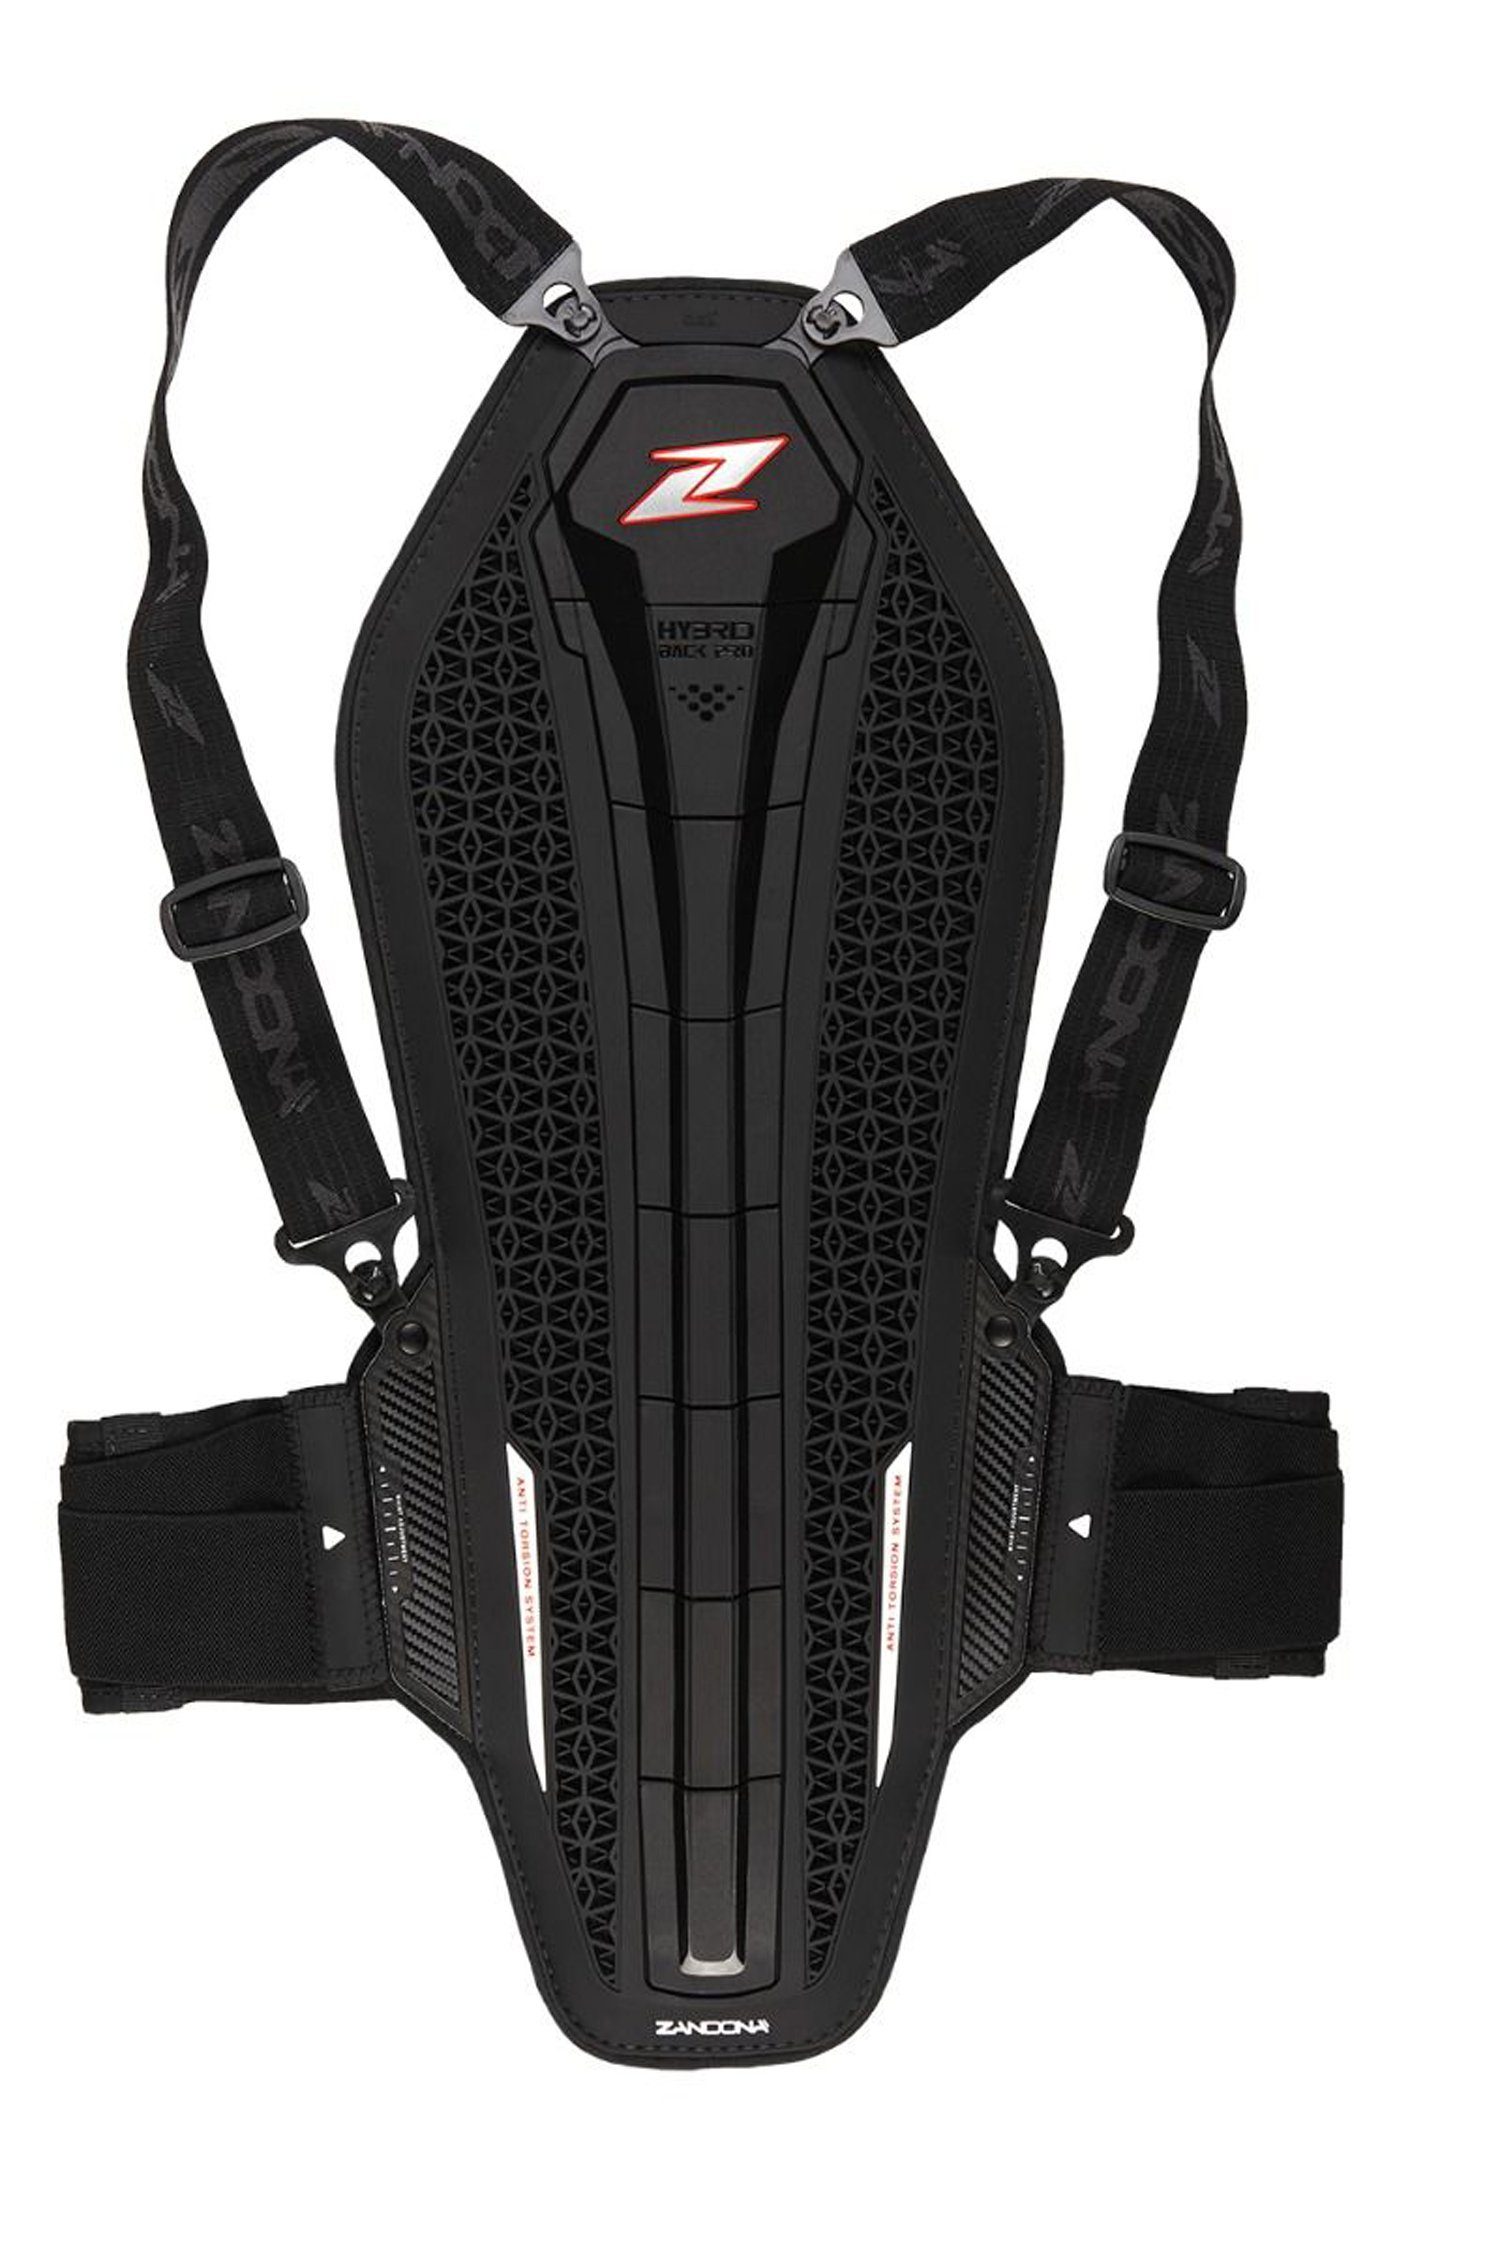 Zandona Rückgrat-/Rückenprotektor Ski Reiten Back Pro Motorrad schwarz, Snowboard Level Hybrid 2 Rückenprotektor